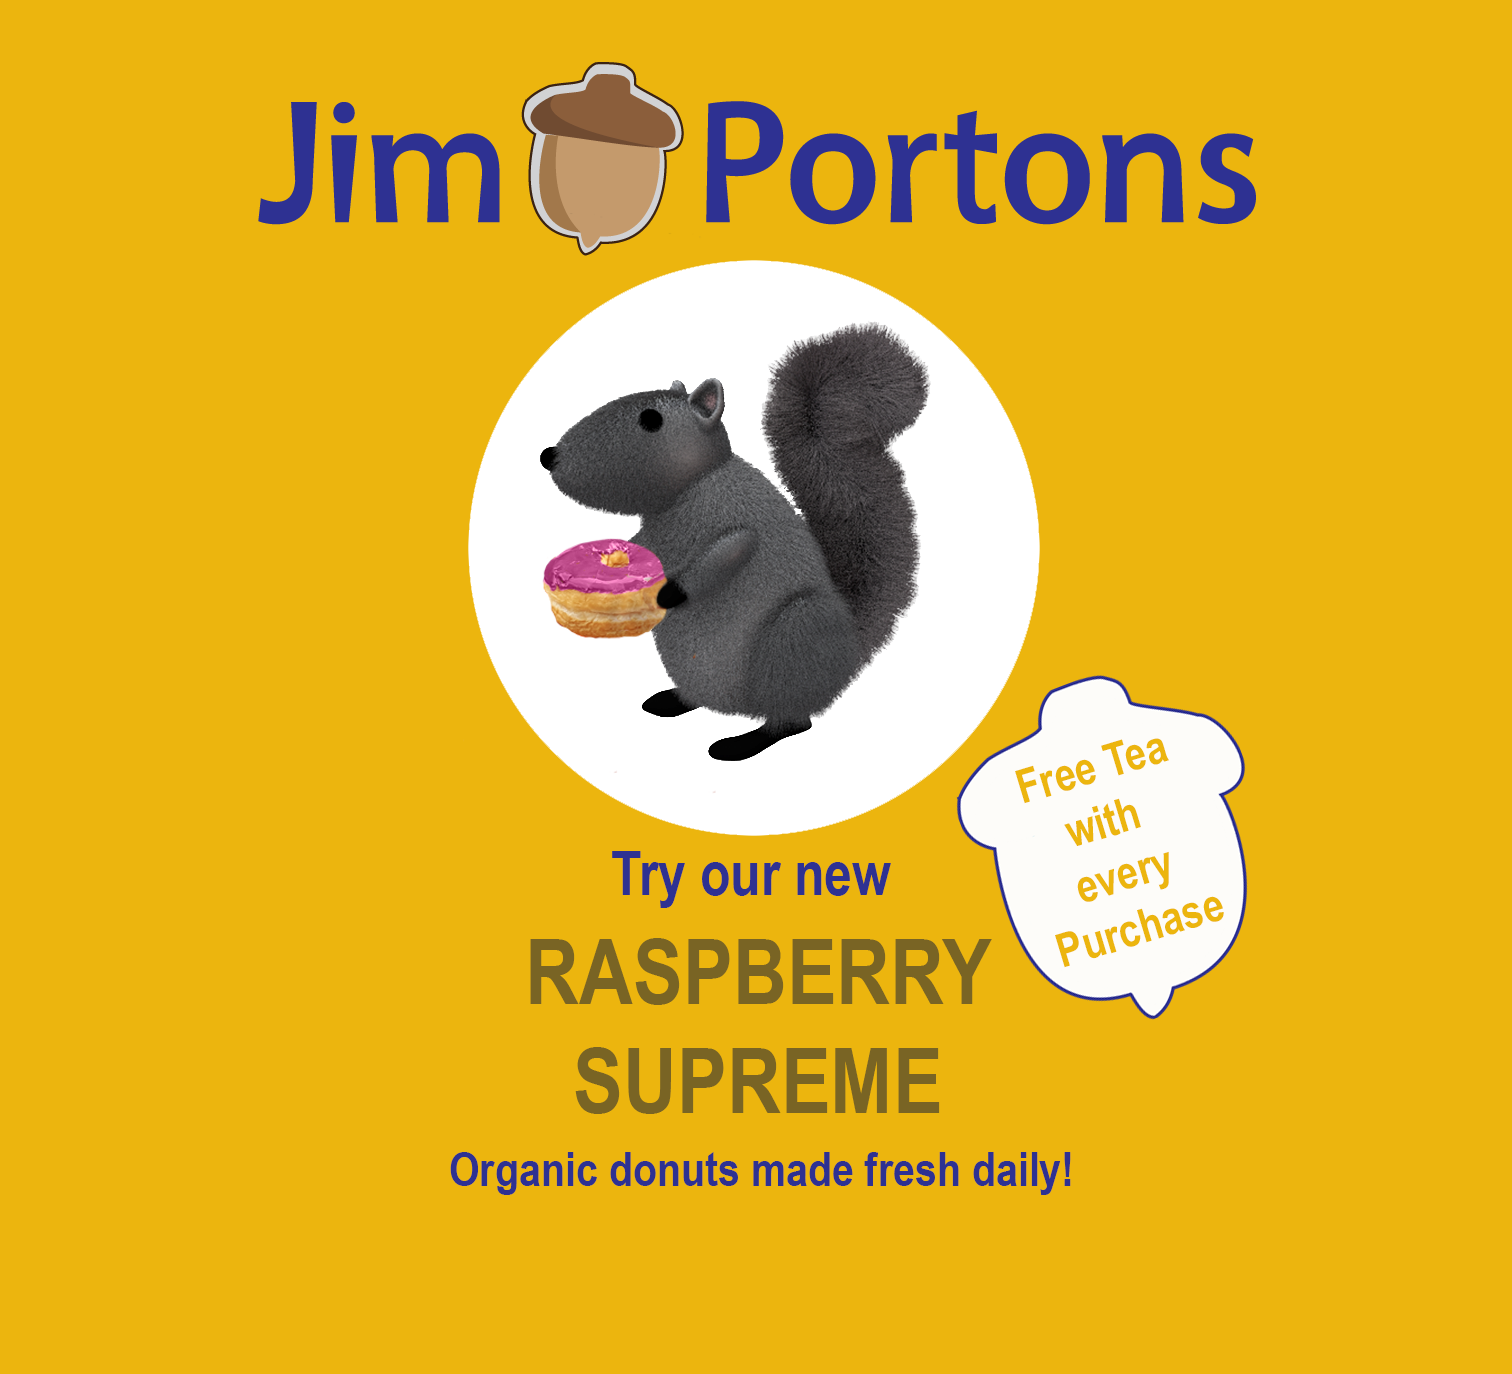 Have you tried Jim Portons Restaurant?